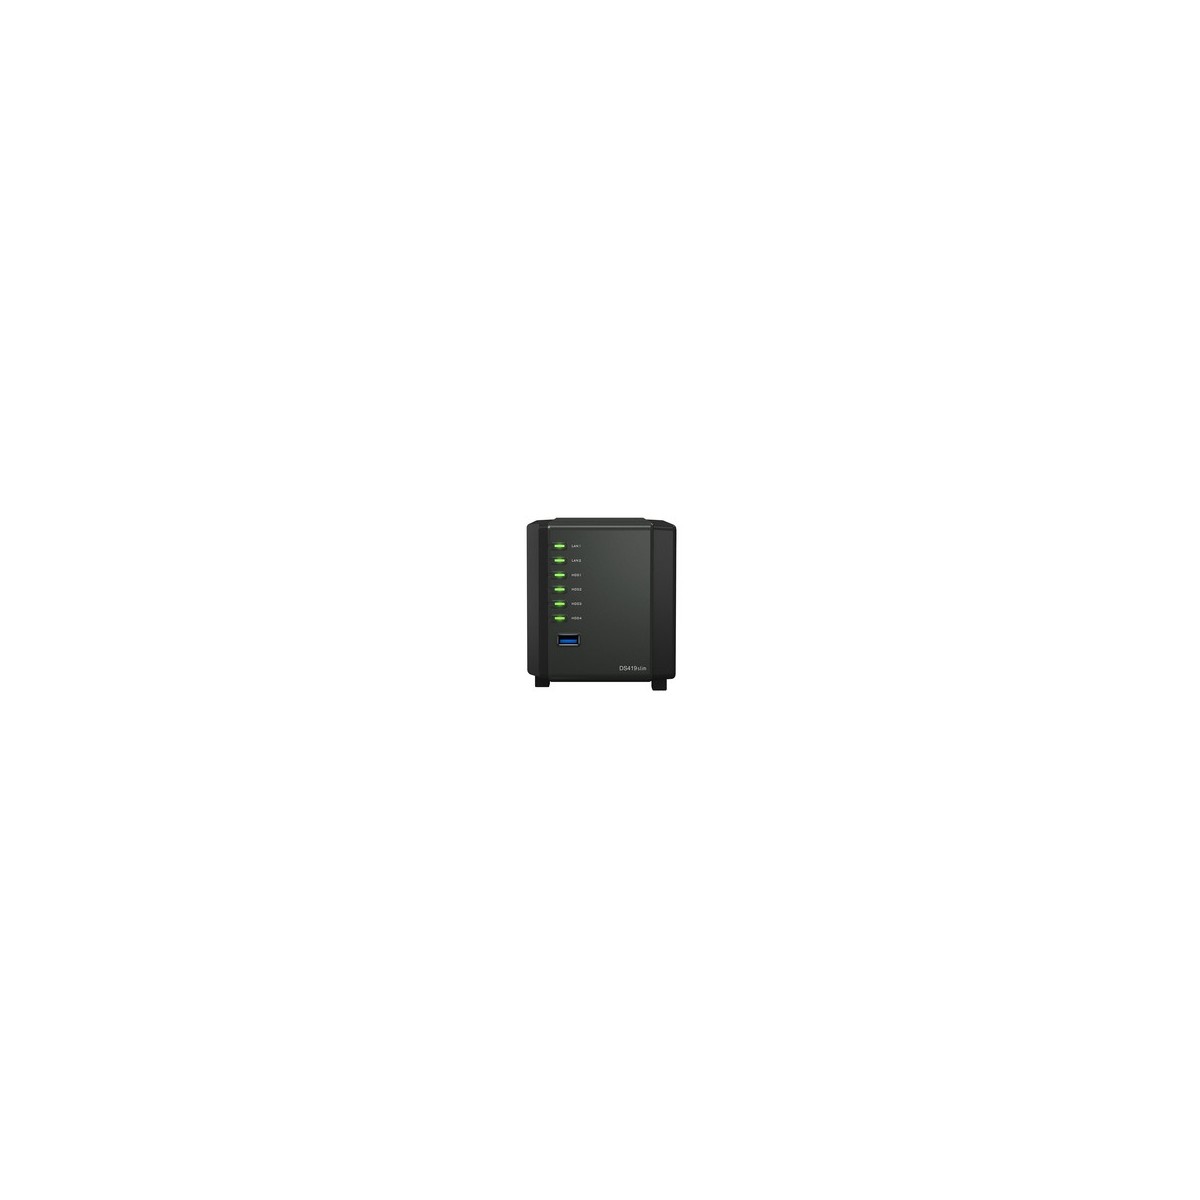 Synology DiskStation DS419slim - NAS - Tower - Marvell - Armada 385 - Black